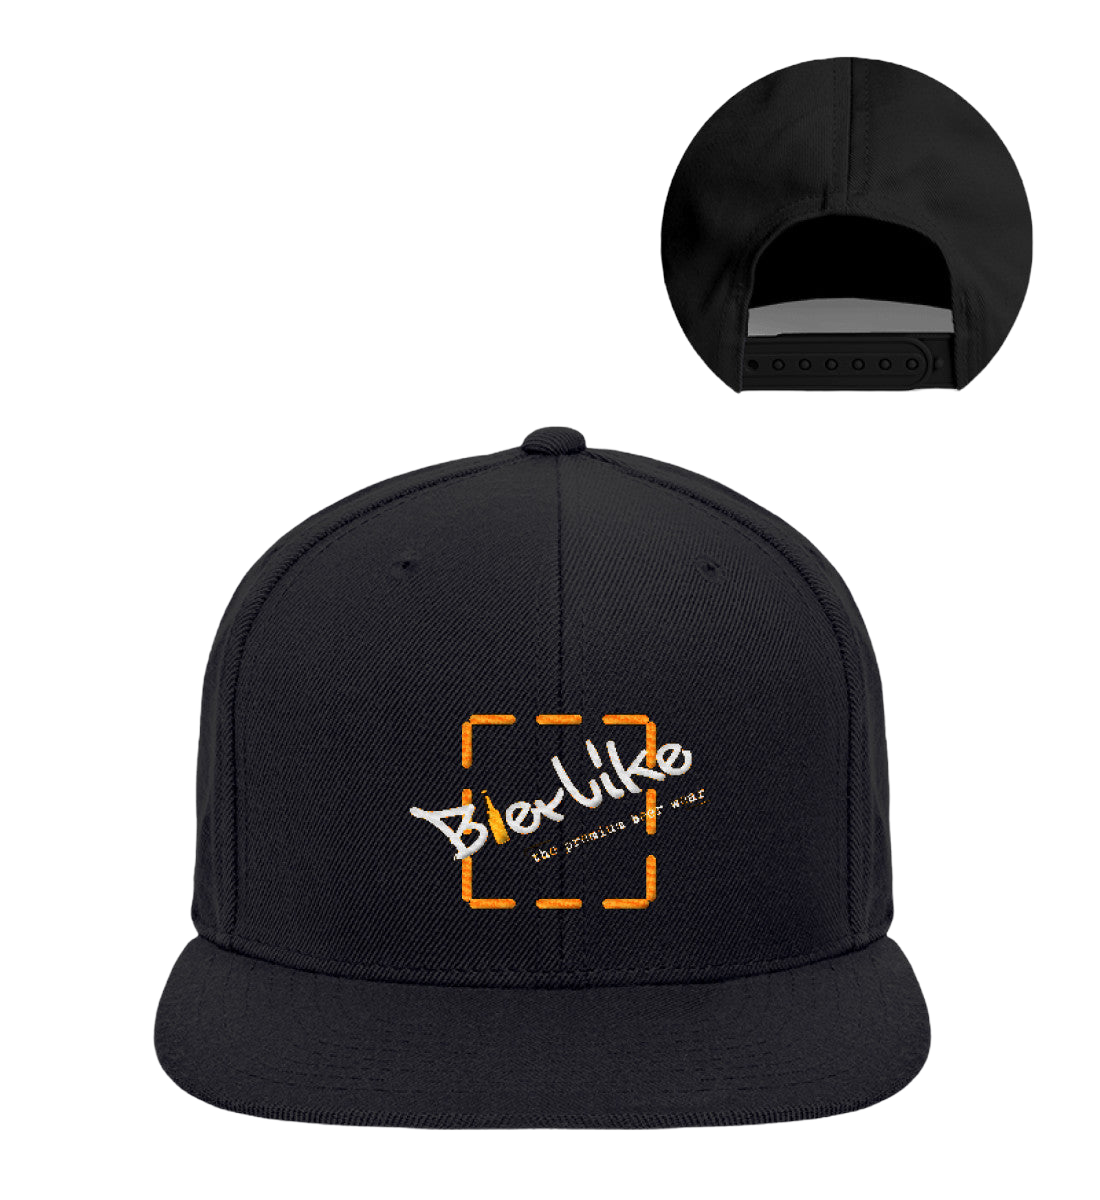 Baseball Snapback Cap - Kappe mit Stick | Bierlike Brand